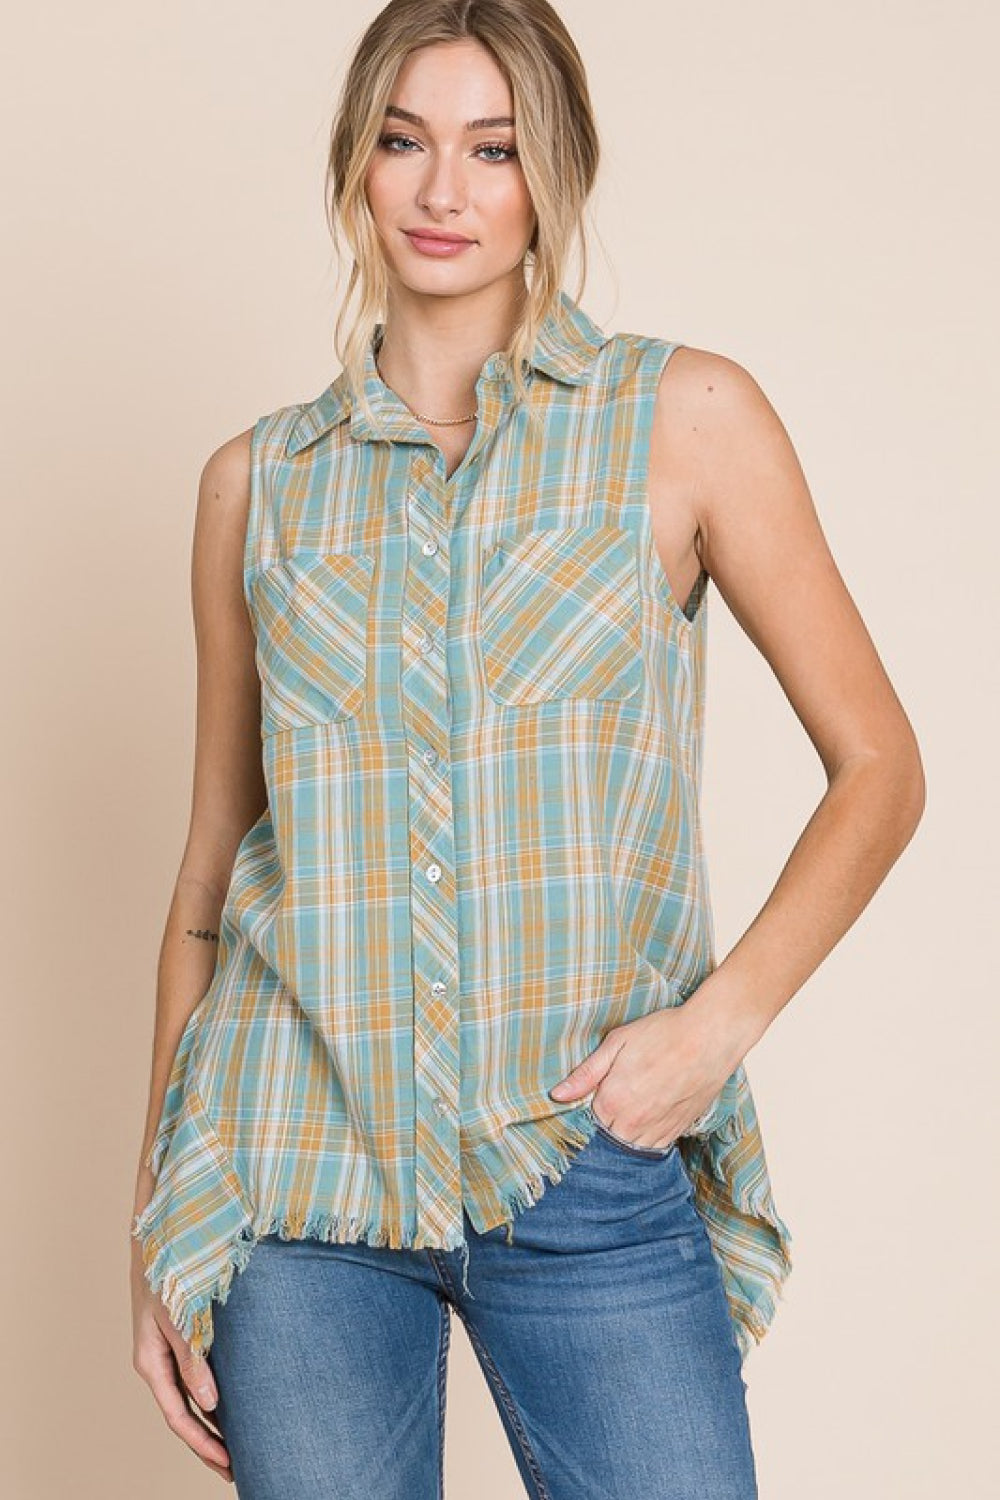 HEYSON Days Gone By Full Size Sleeveless Frayed Plaid Button-Up Shirt